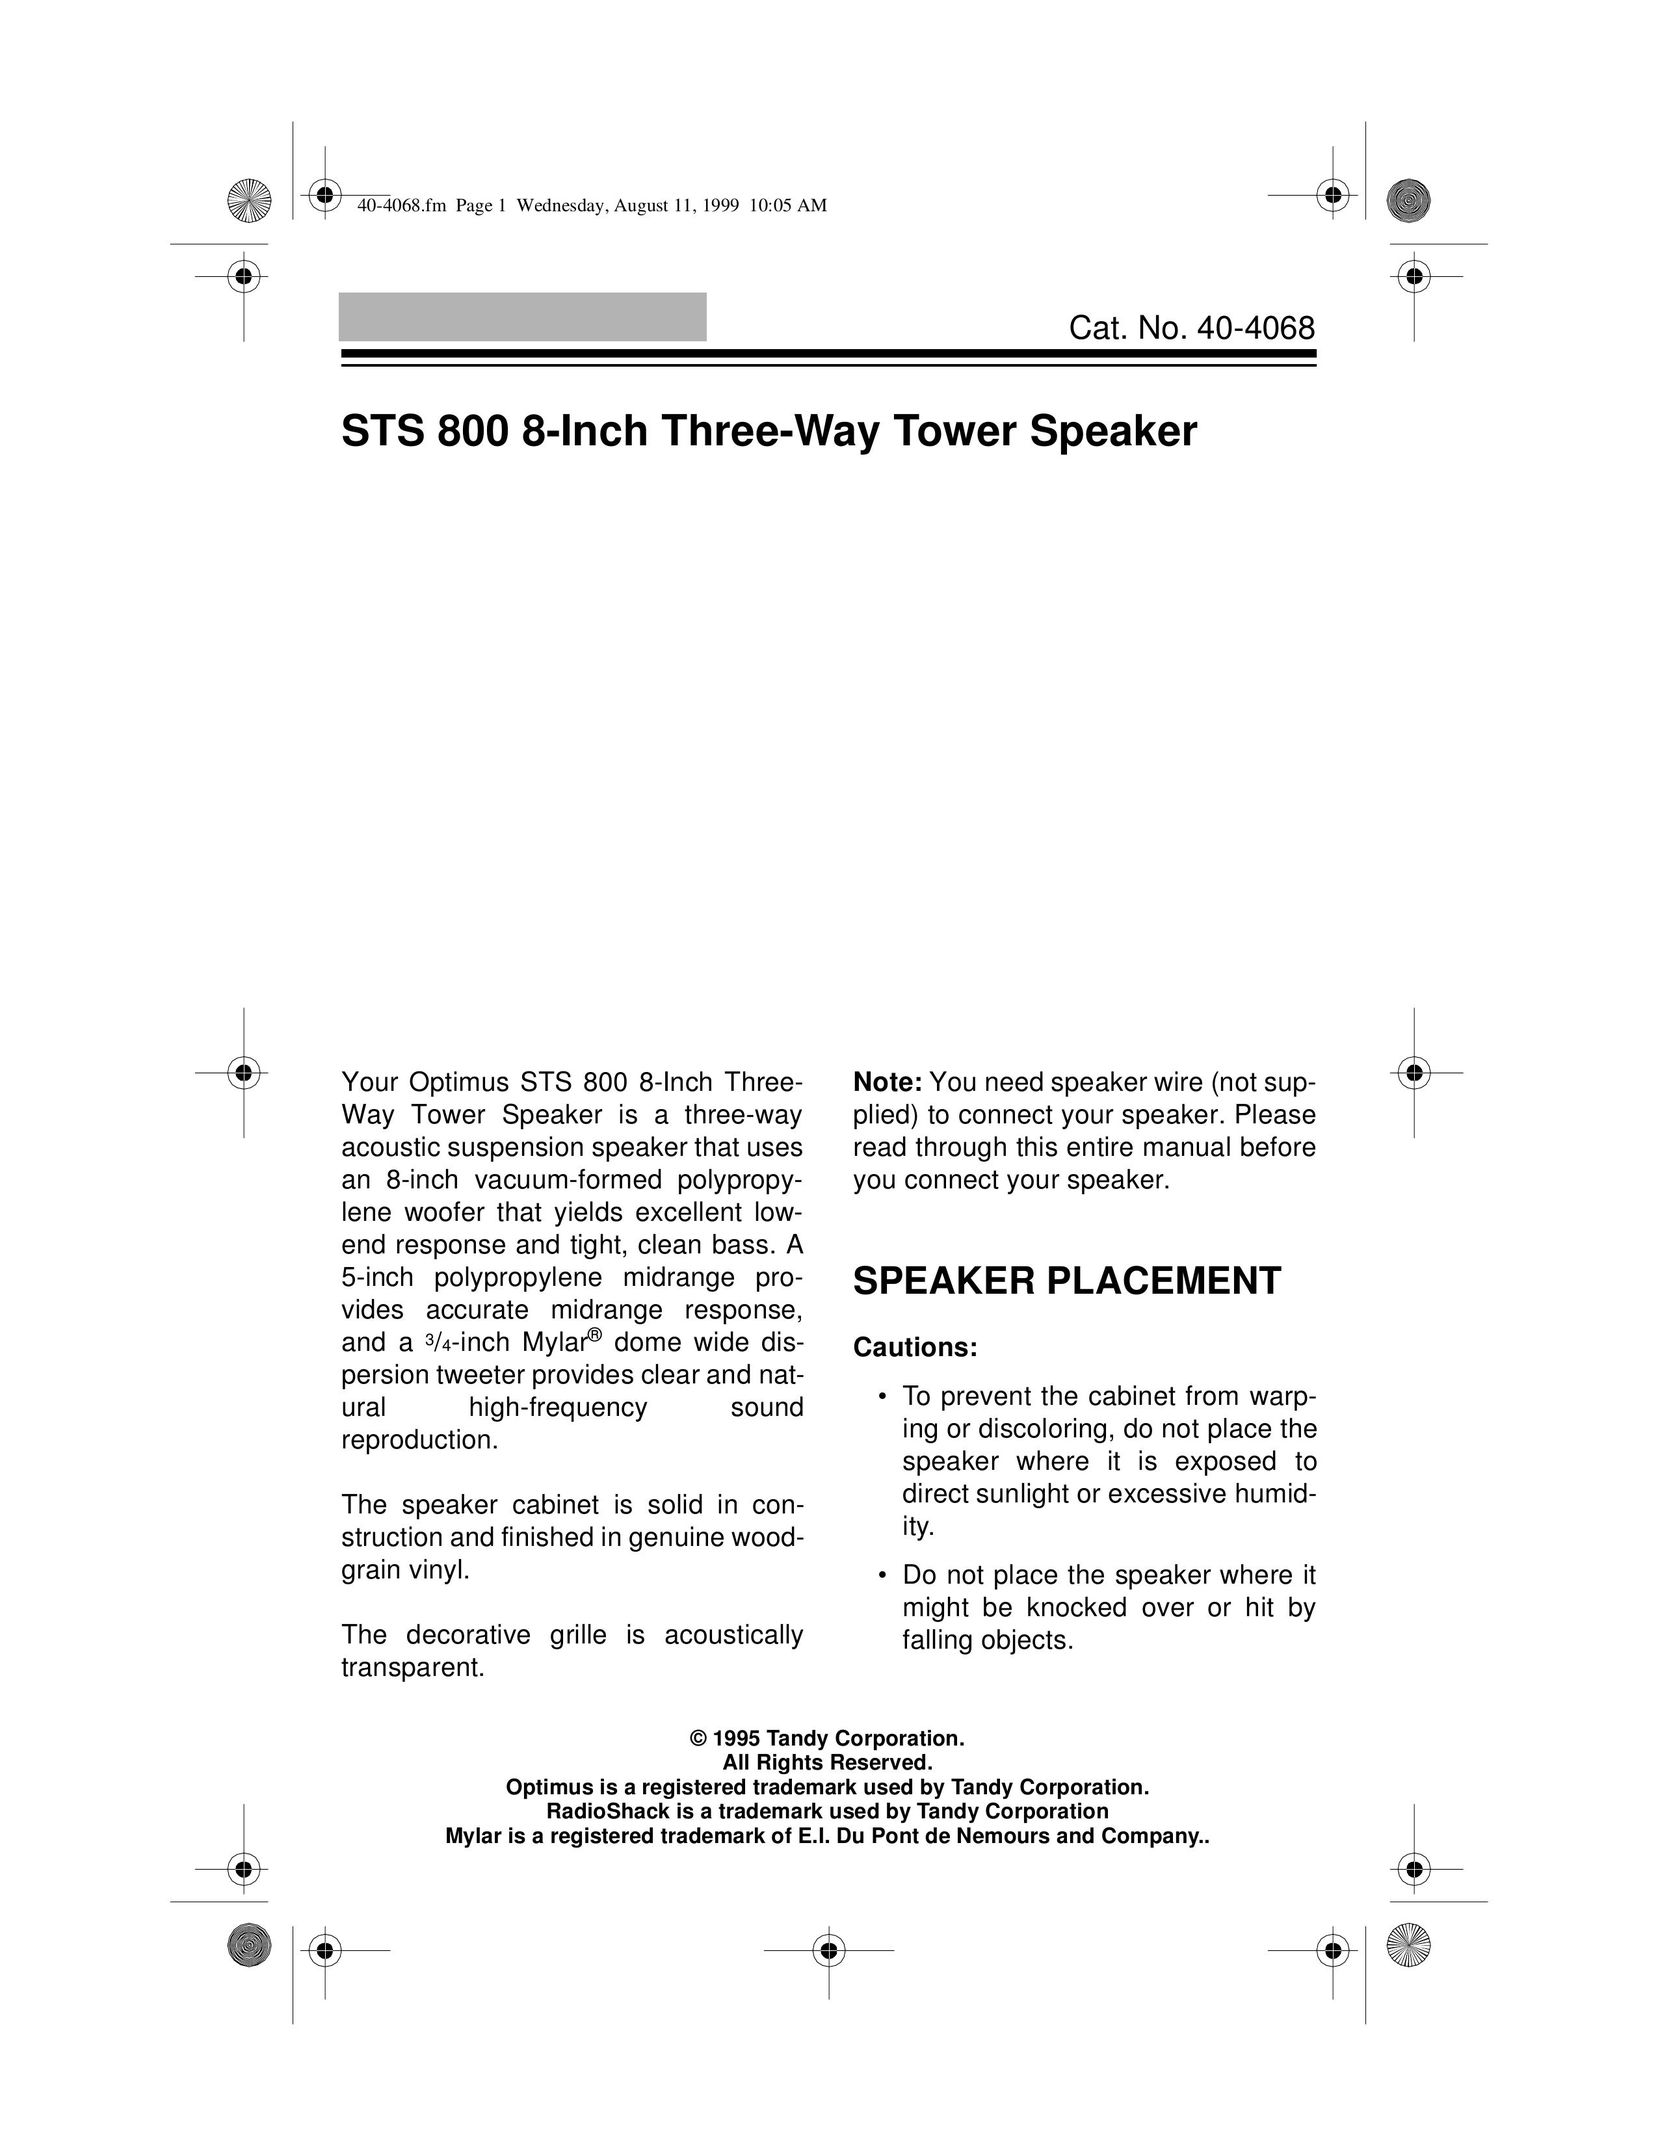 Radio Shack STS 800 Speaker User Manual